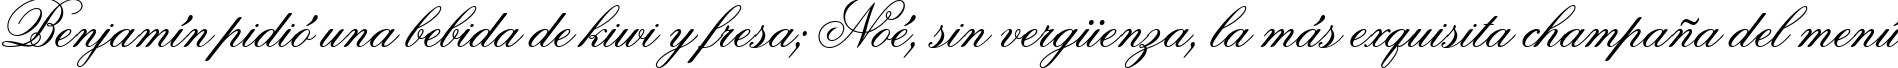 Пример написания шрифтом Flemish Script BT текста на испанском